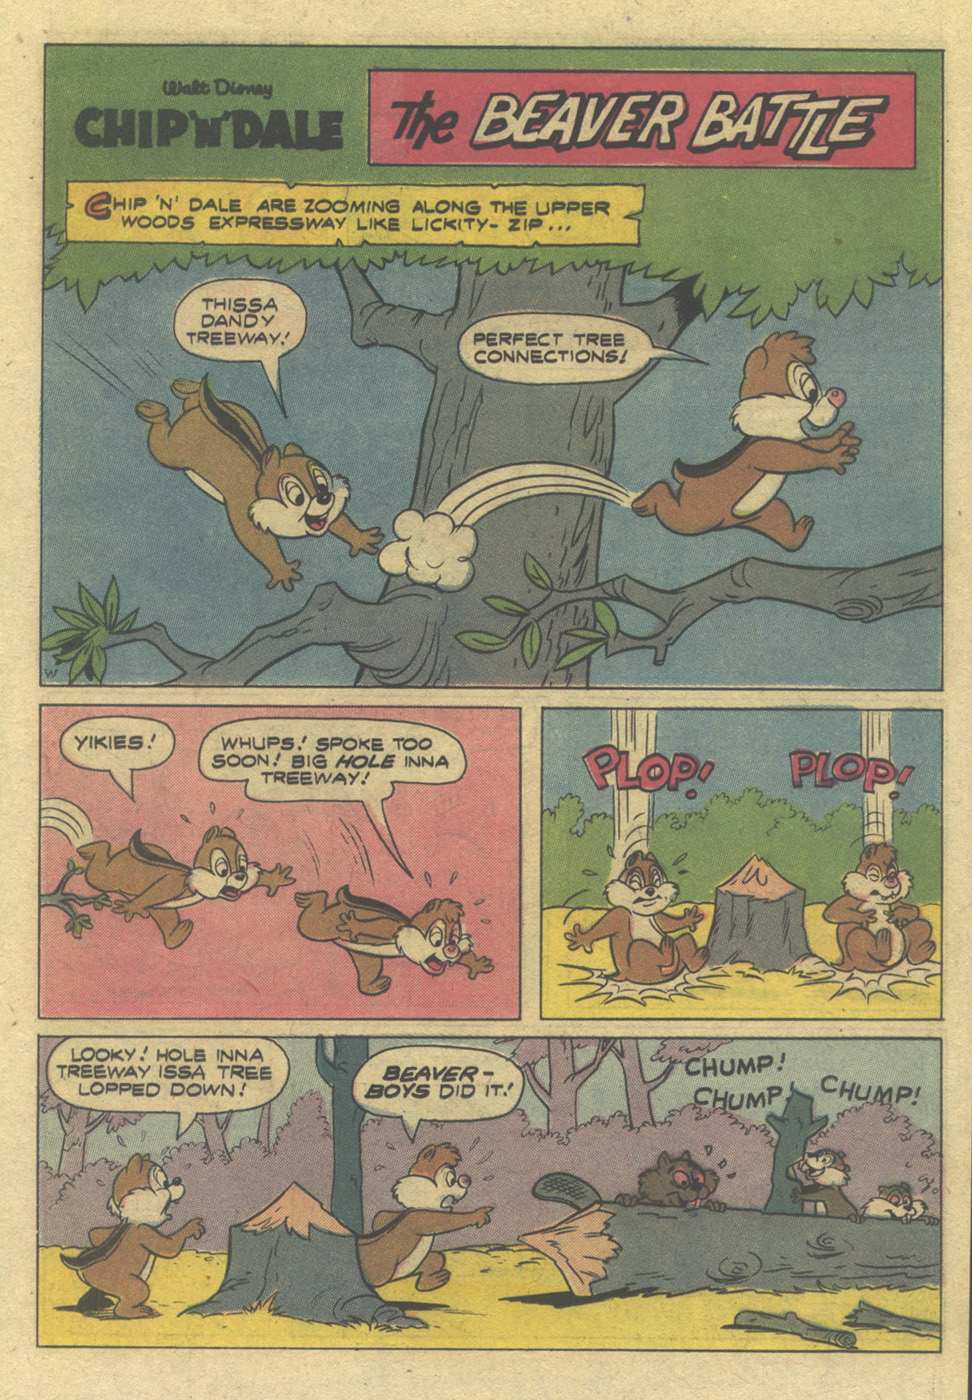 Walt Disney Chip 'n' Dale issue 47 - Page 11